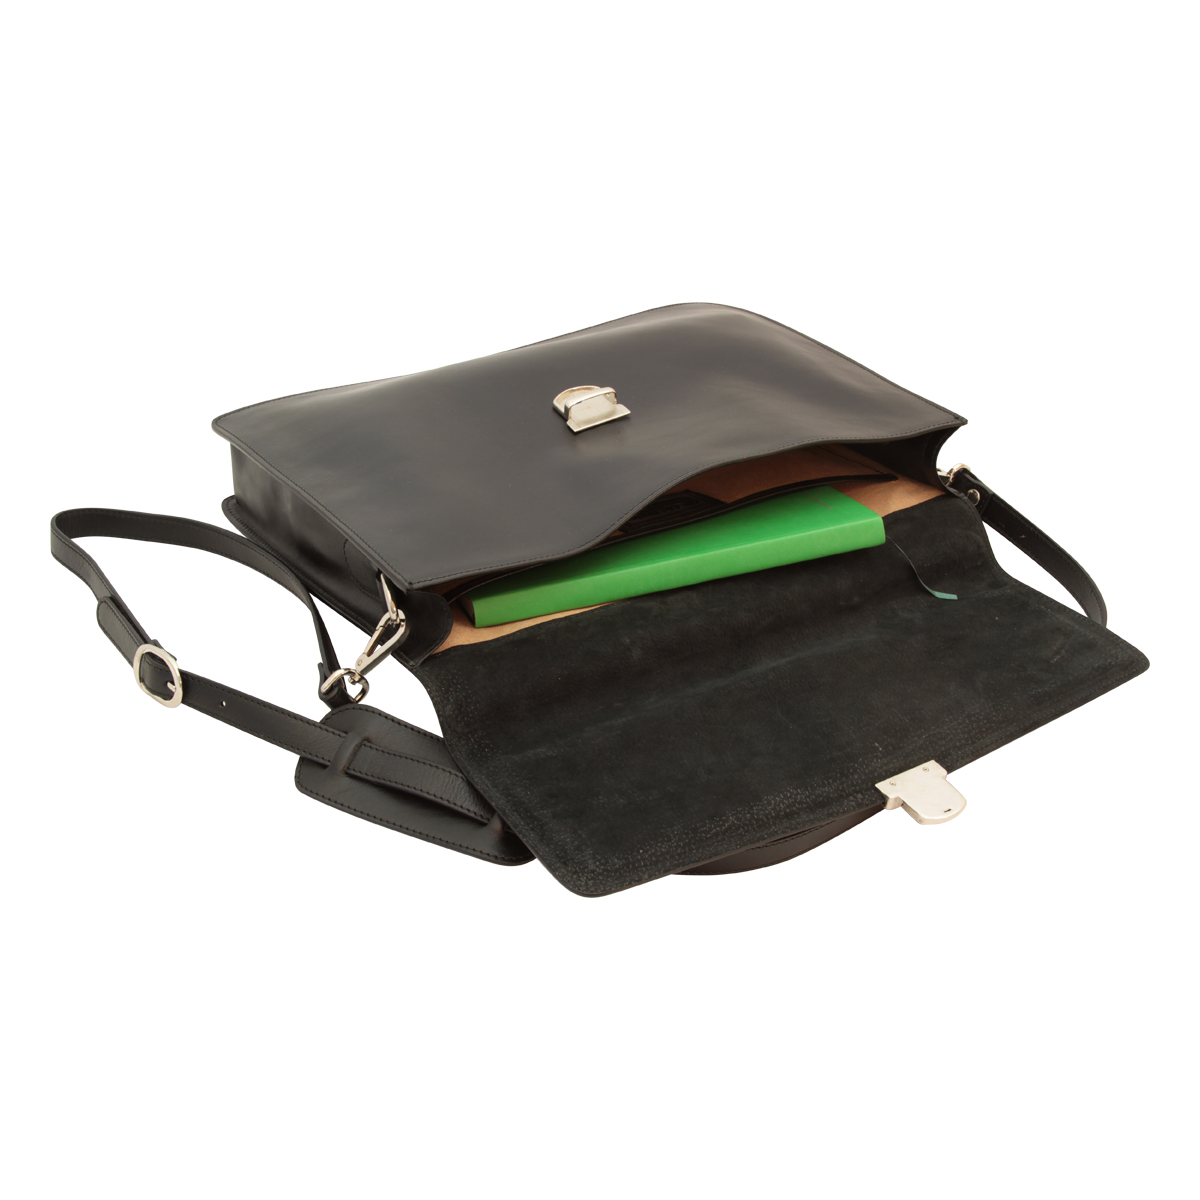 Business leather briefcase black | 407589NE | EURO | Old Angler Firenze